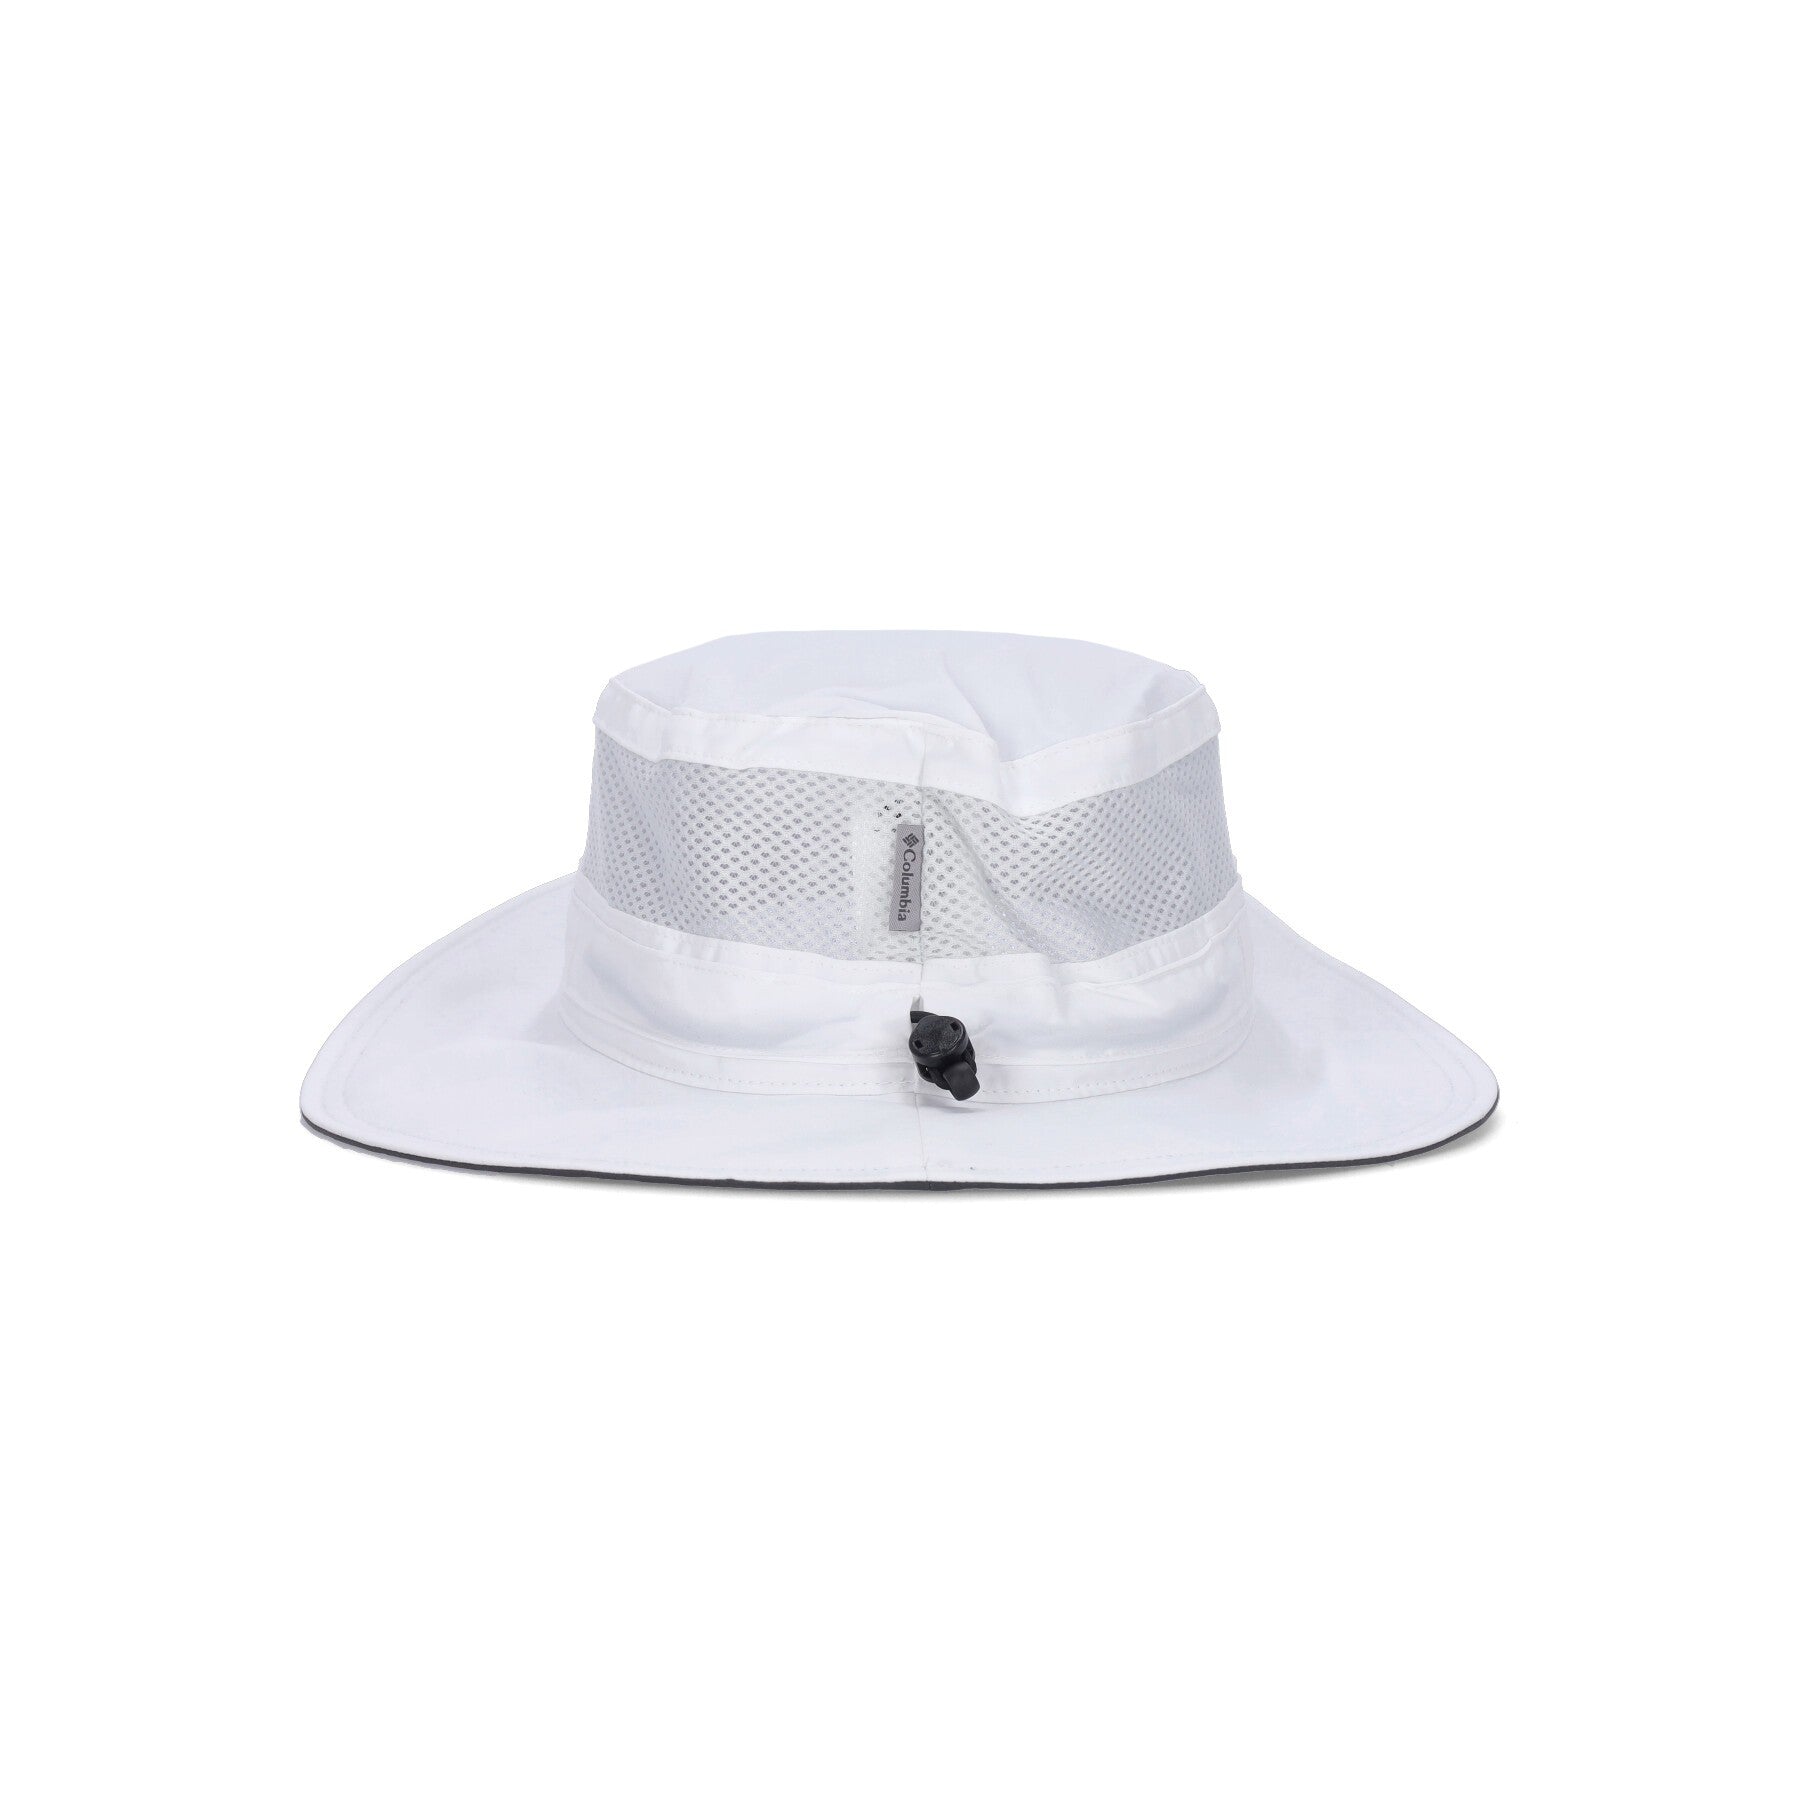 Bora Bora Booney Men's Wide Brim Hat